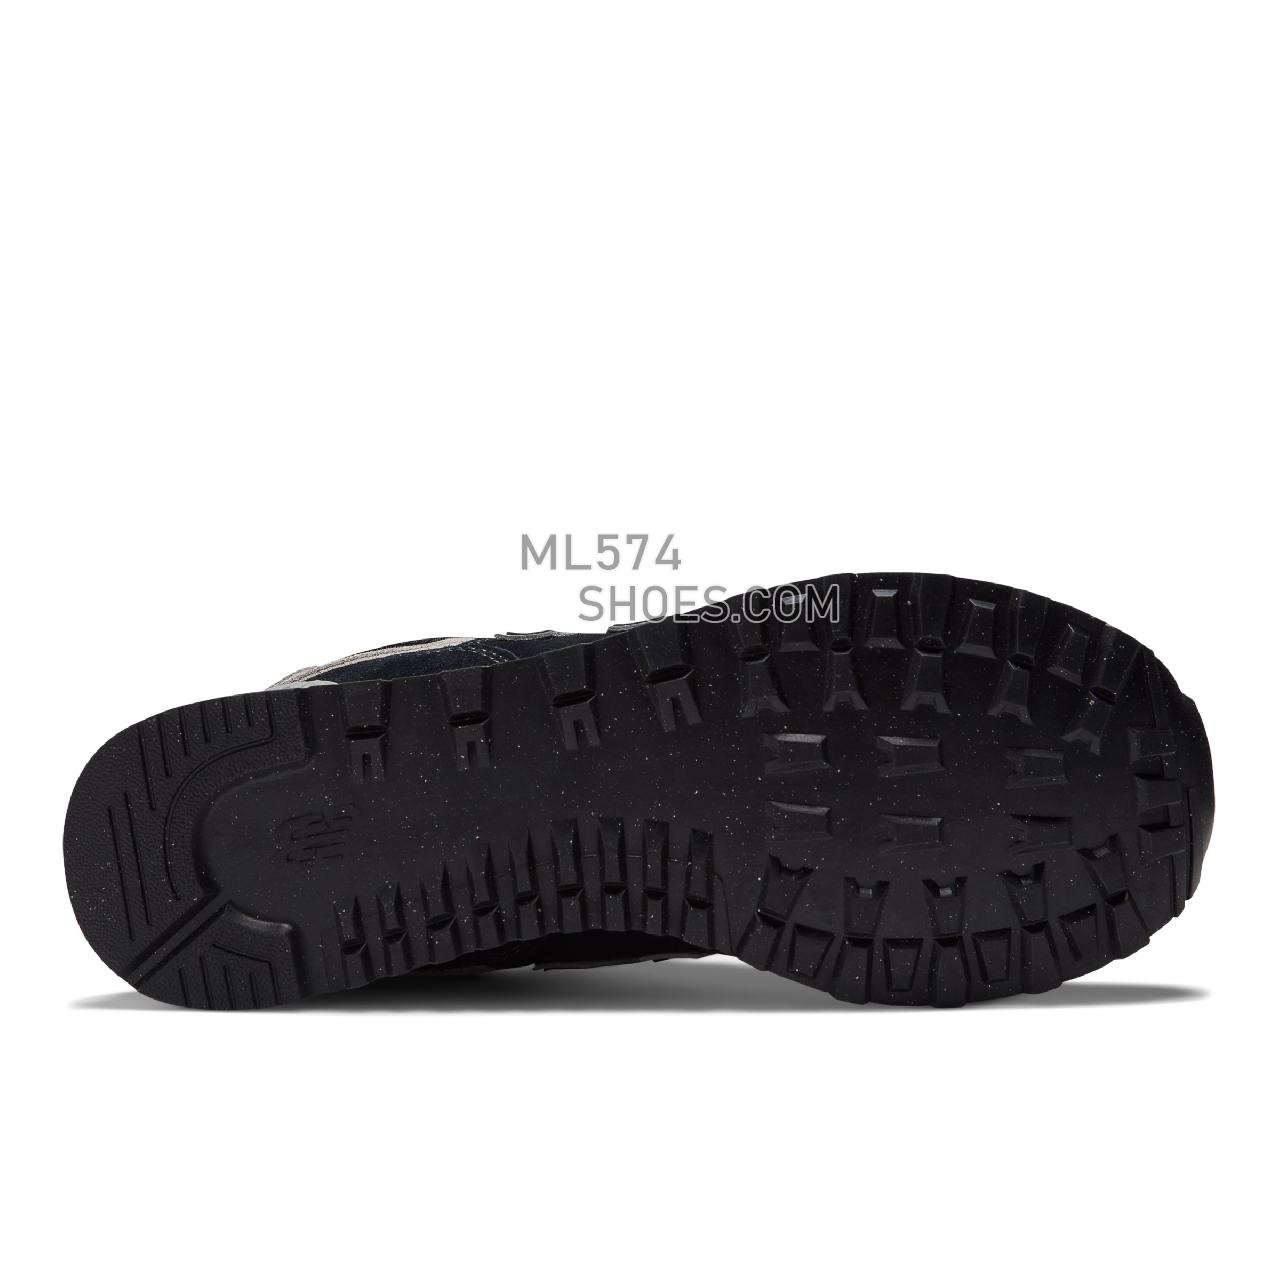 New Balance 574v3 - Men's Classic Sneakers - Black with White - ML574EVB